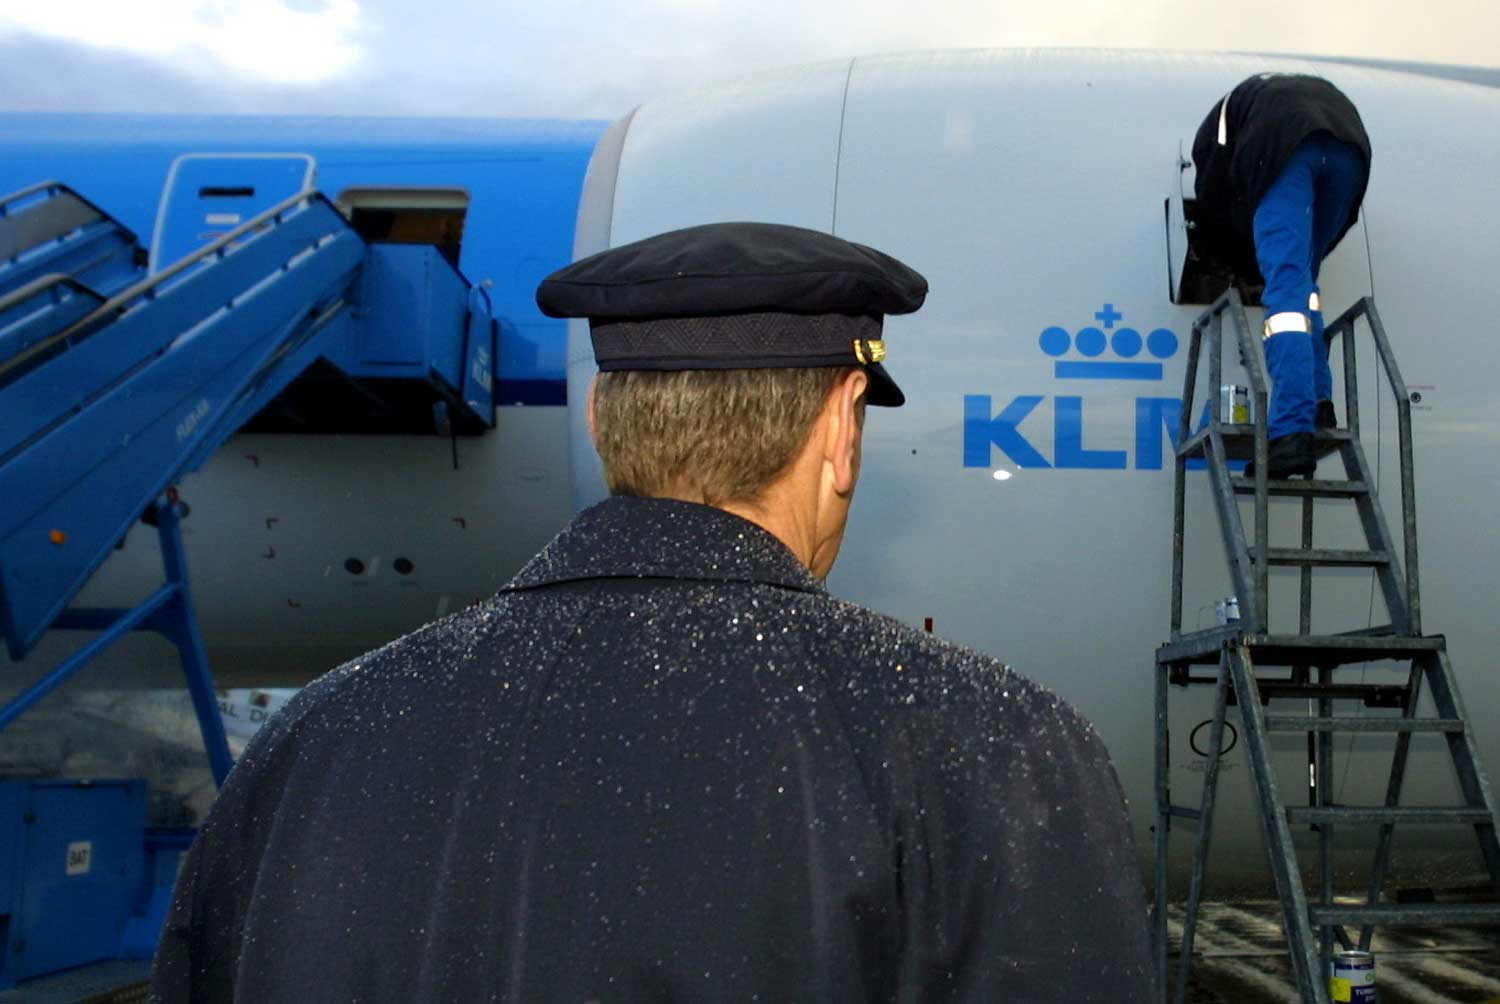 Petje af voor alle KLM piloten